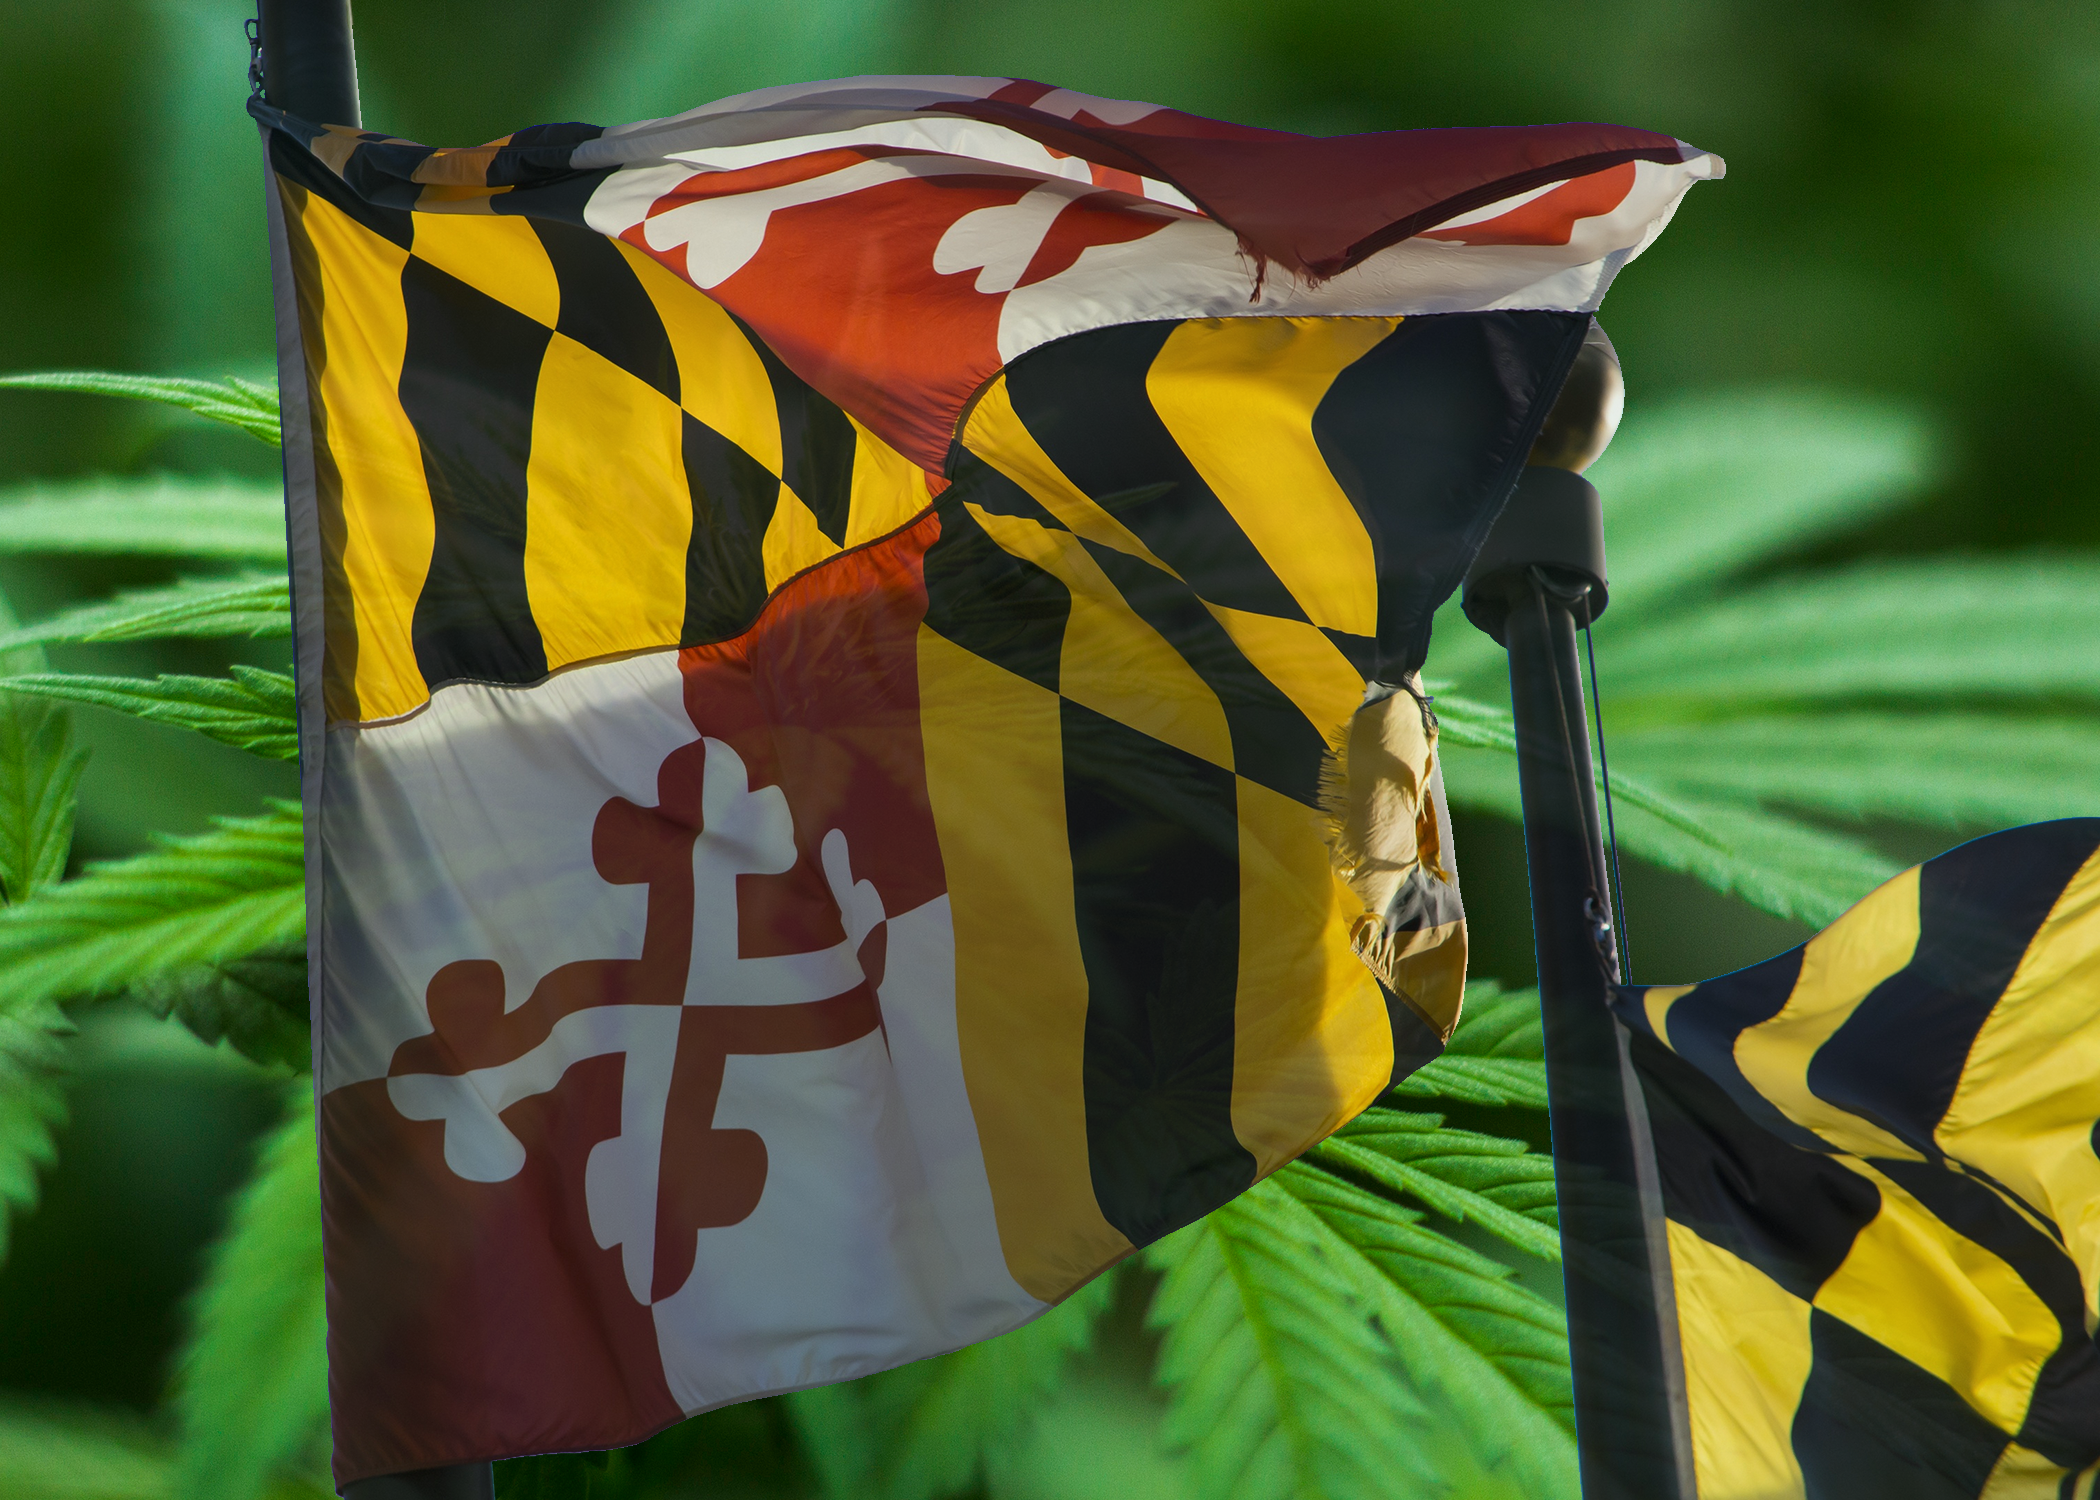 A Year in Review: The Progress of Maryland’s Medical Marijuana Program